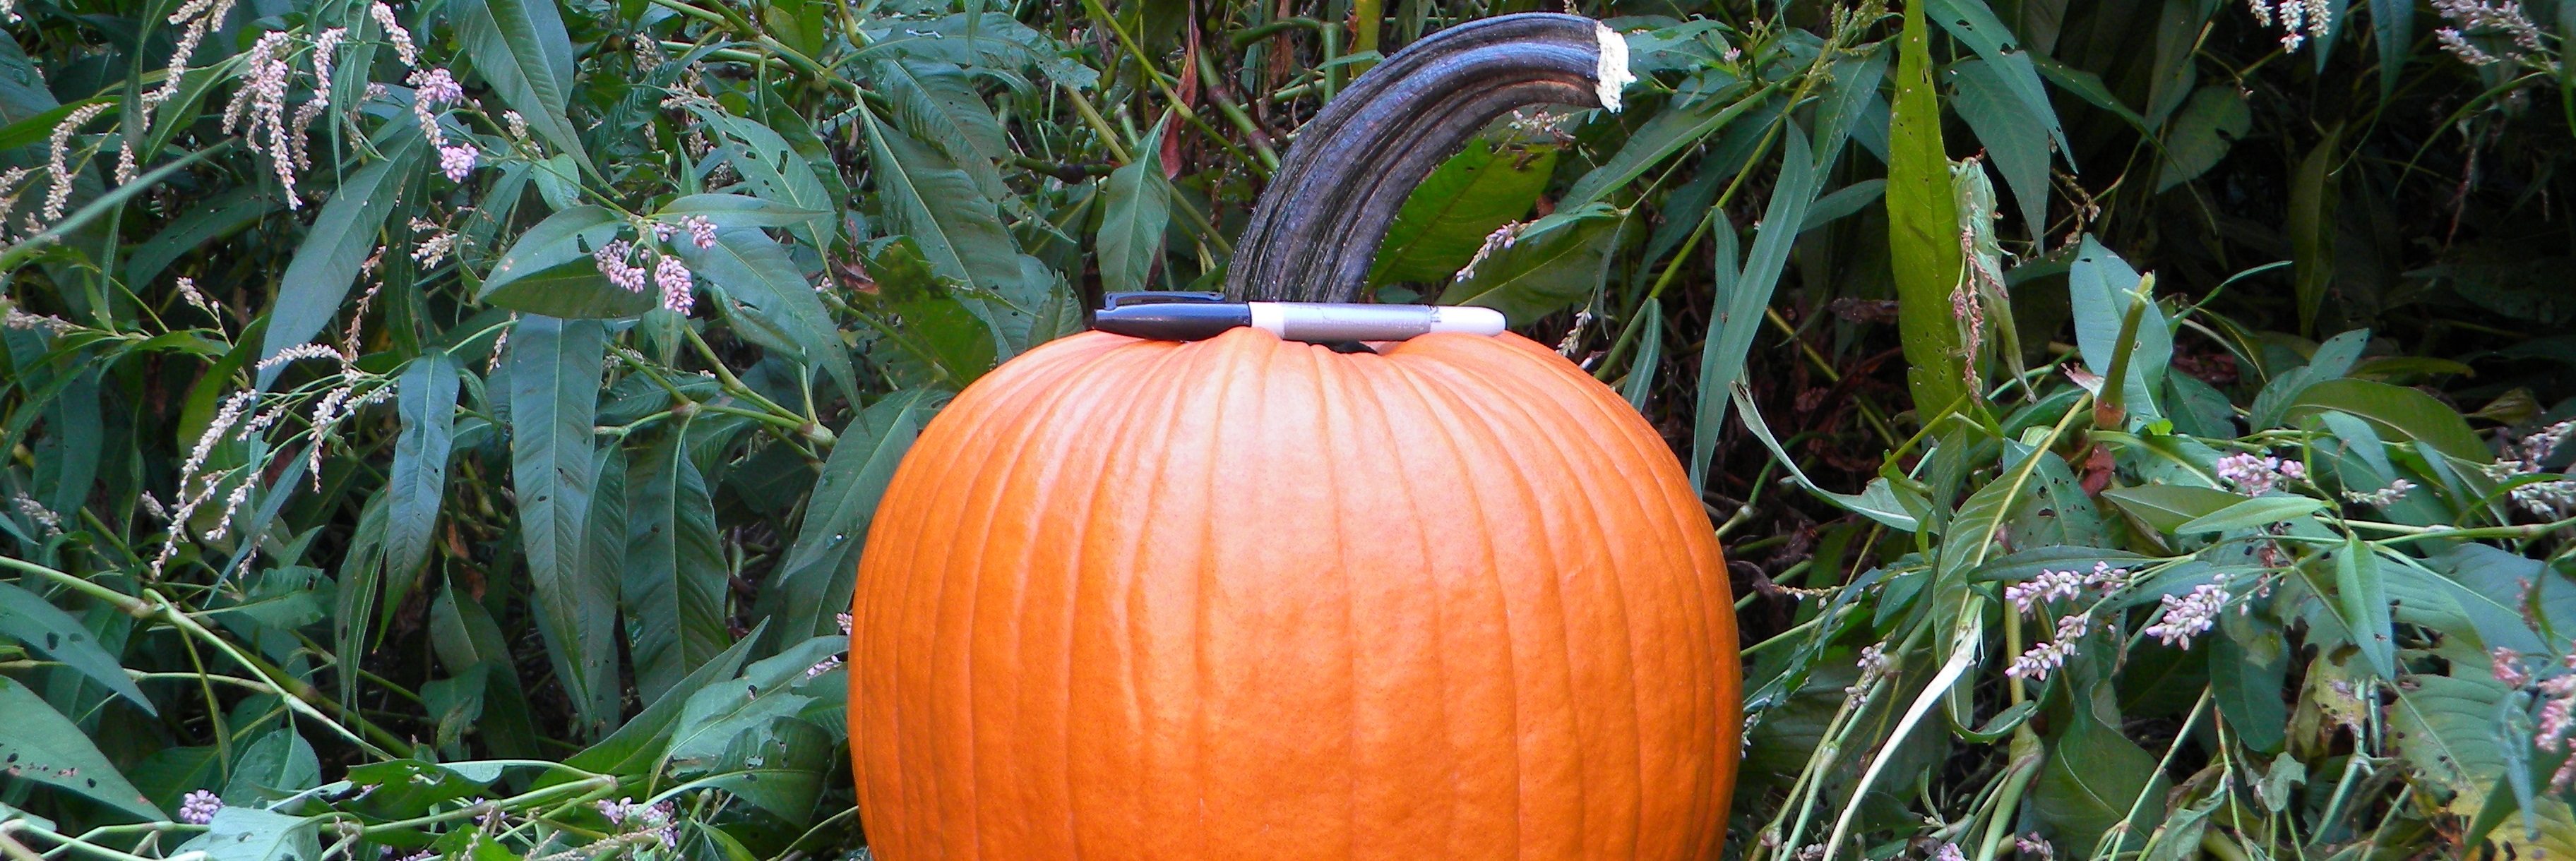 pumpkin-category.jpg